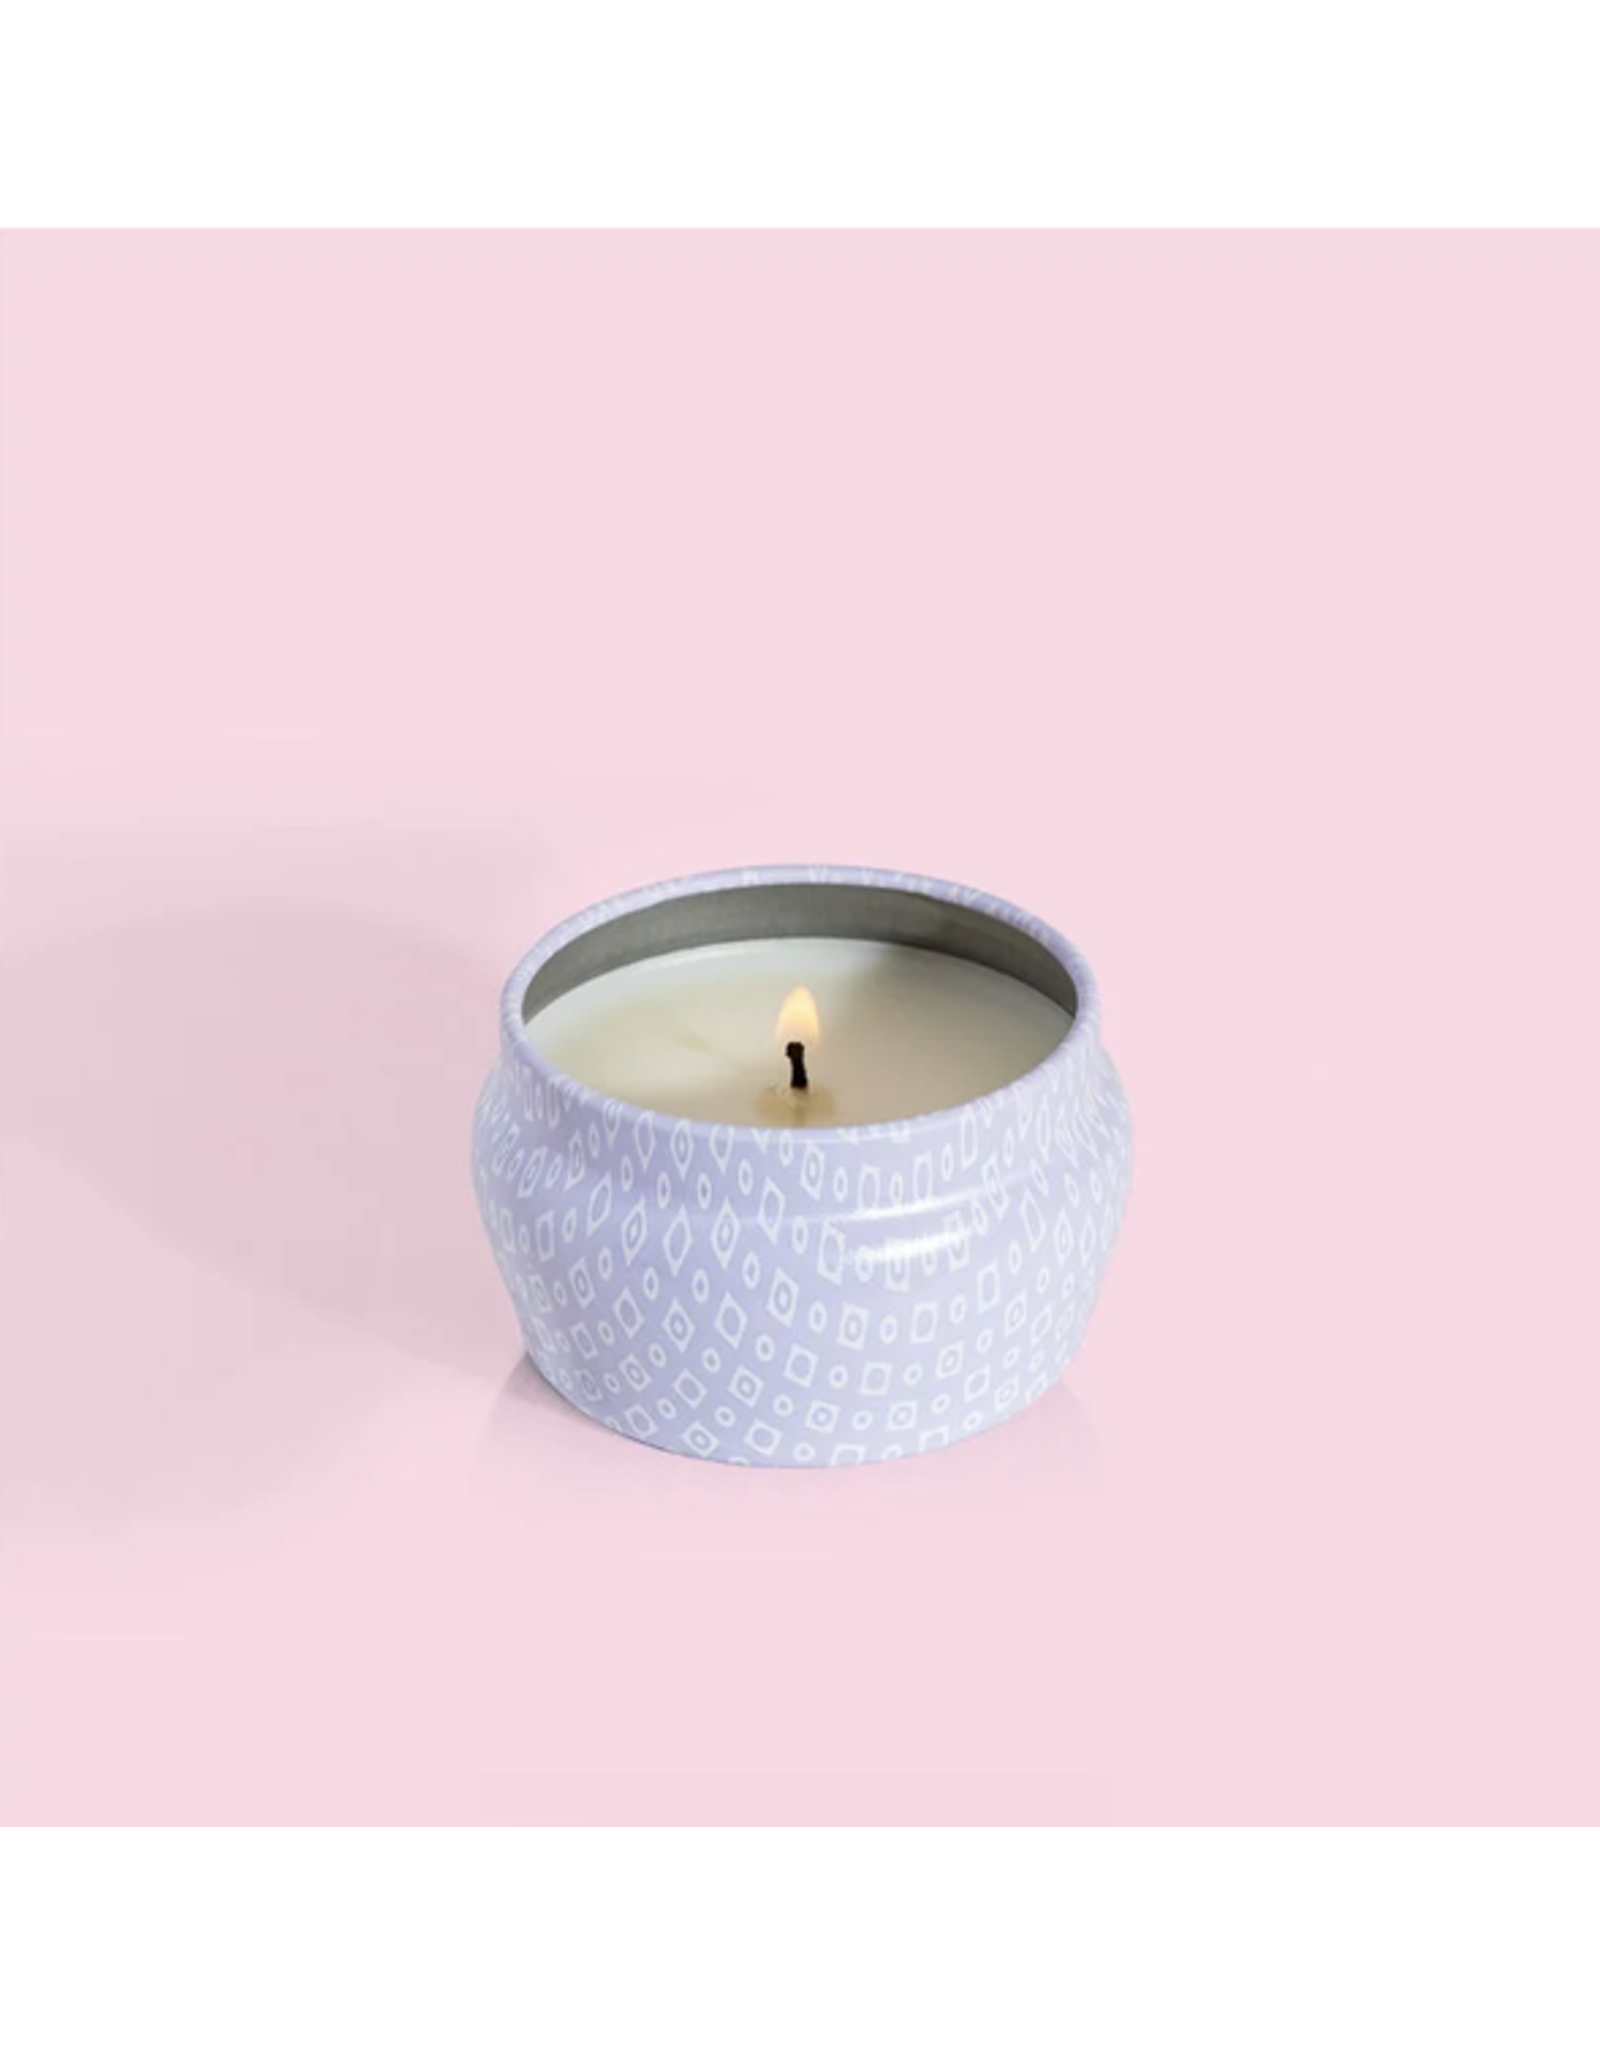 Candle Volcano Digital Lavender CB Printed Mini Tin 3